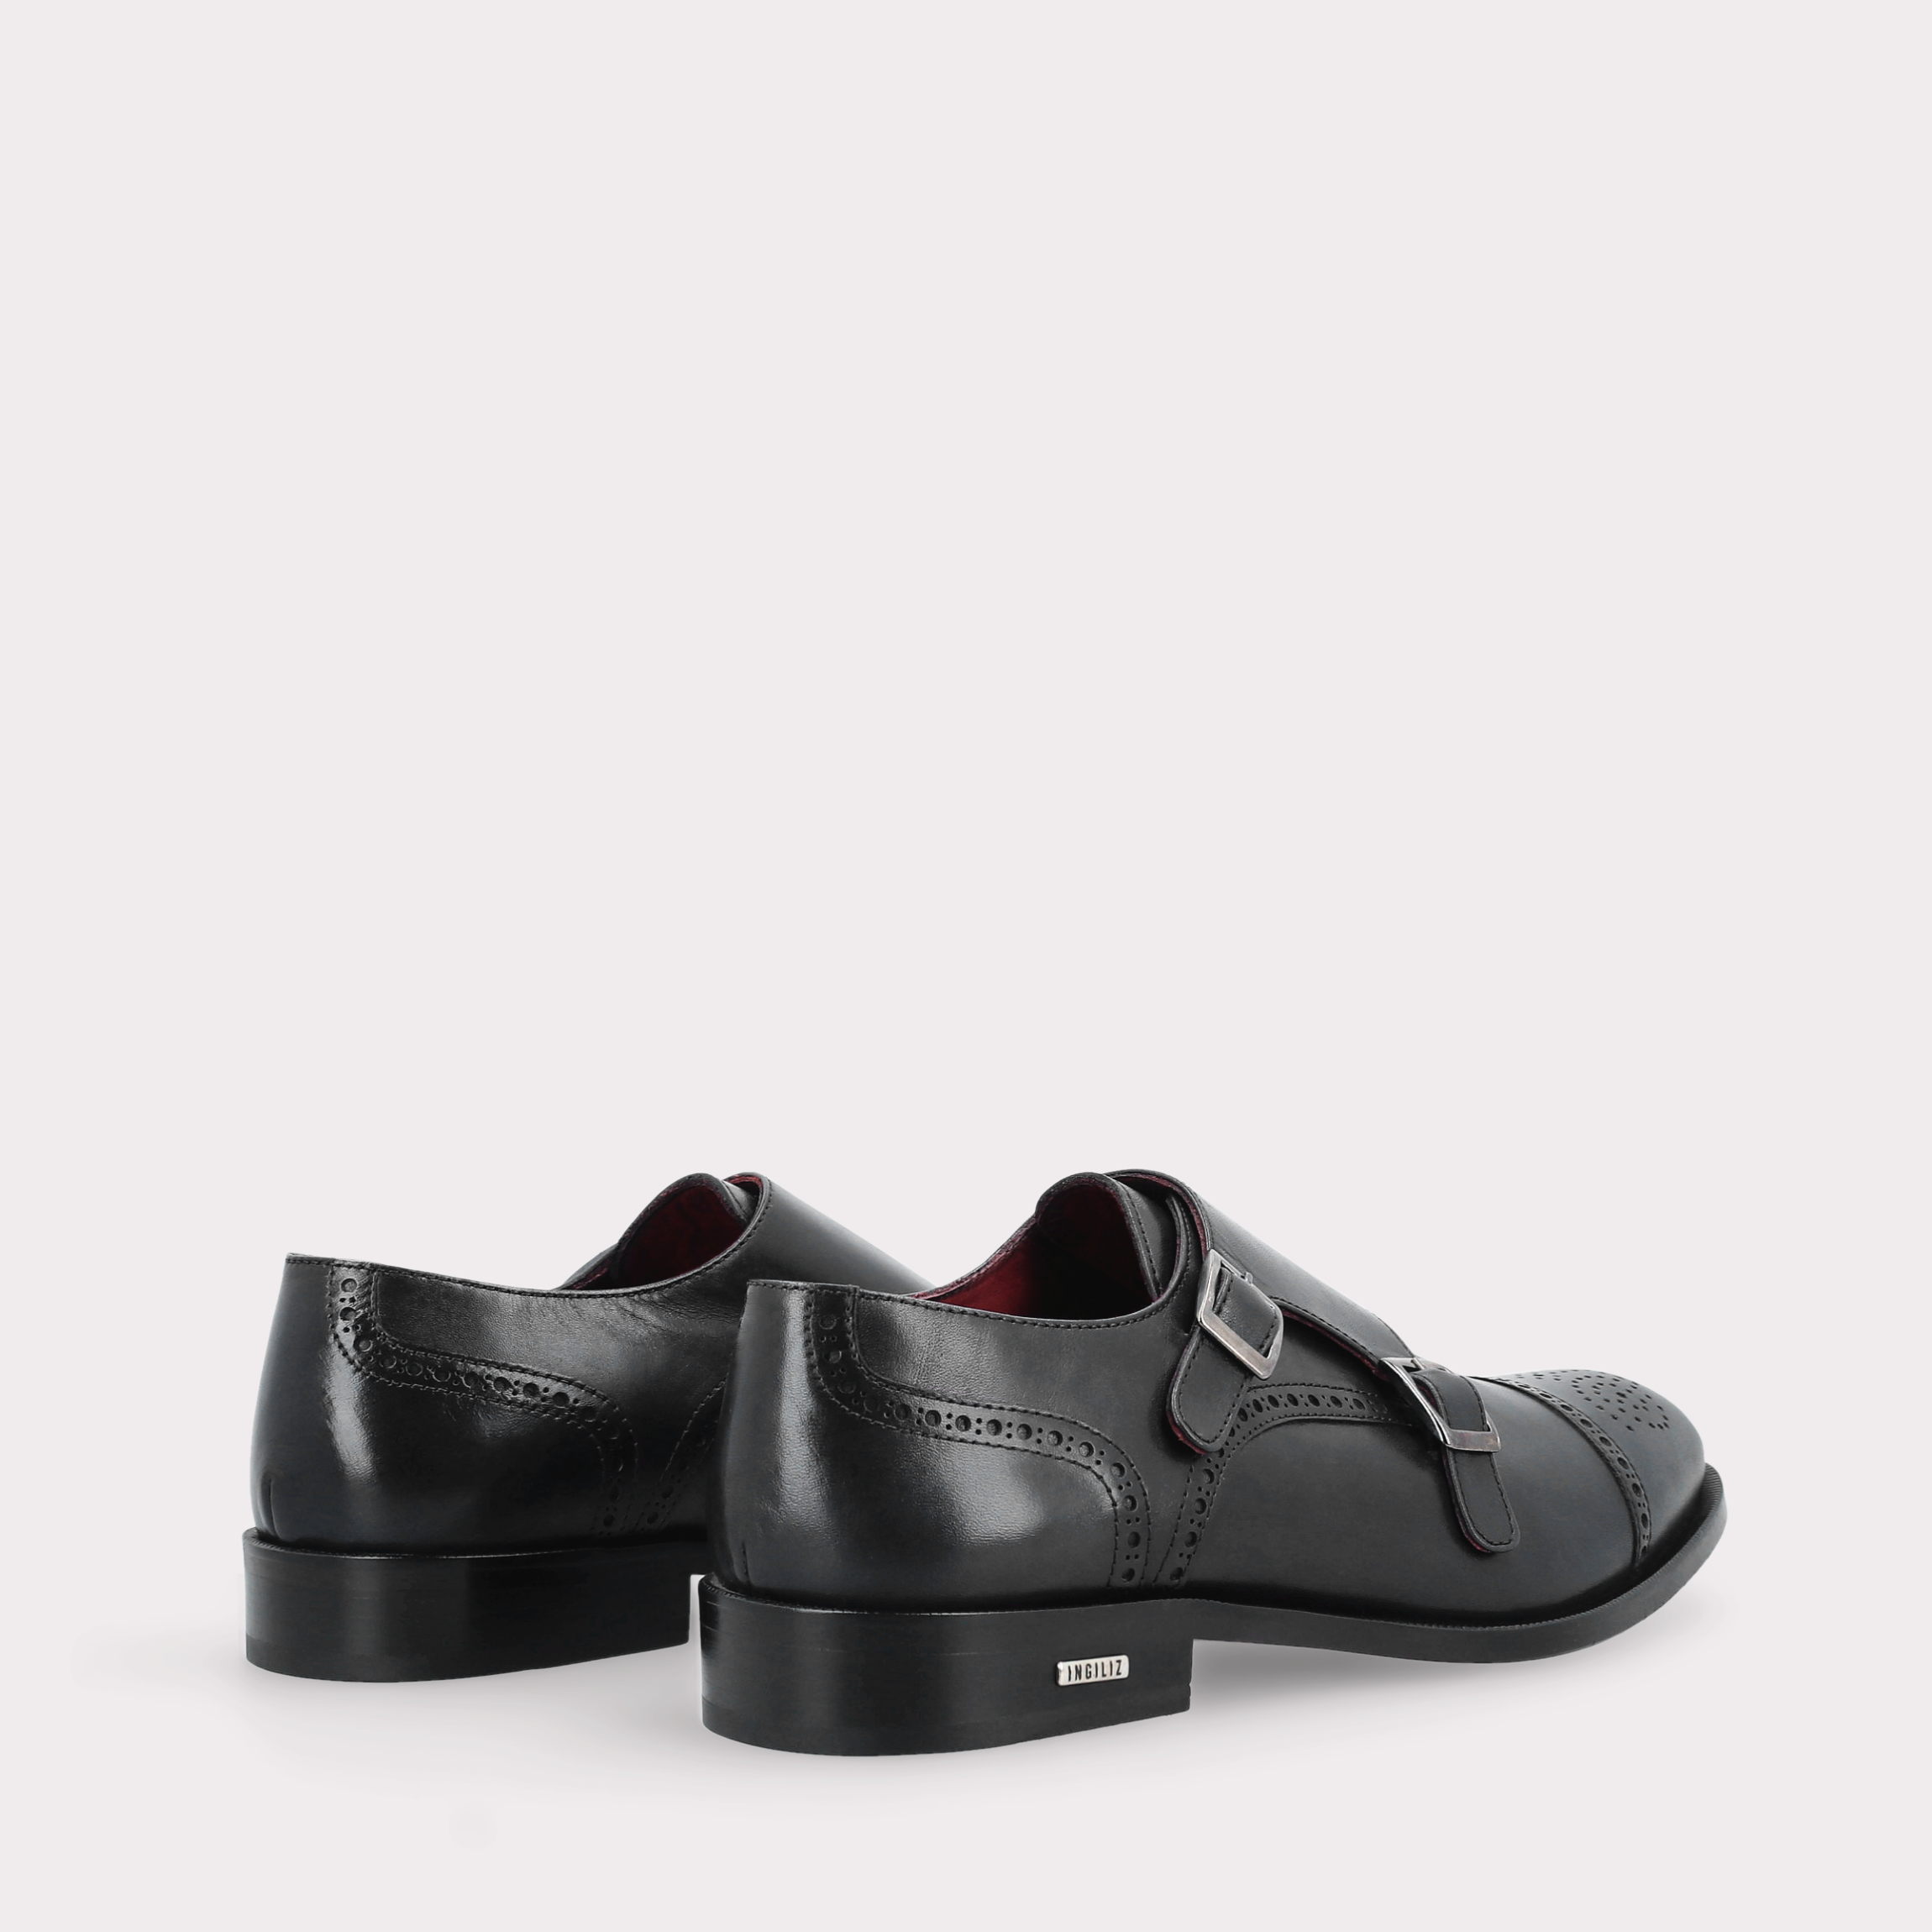 TRENTO 01 black leather monk strap shoes